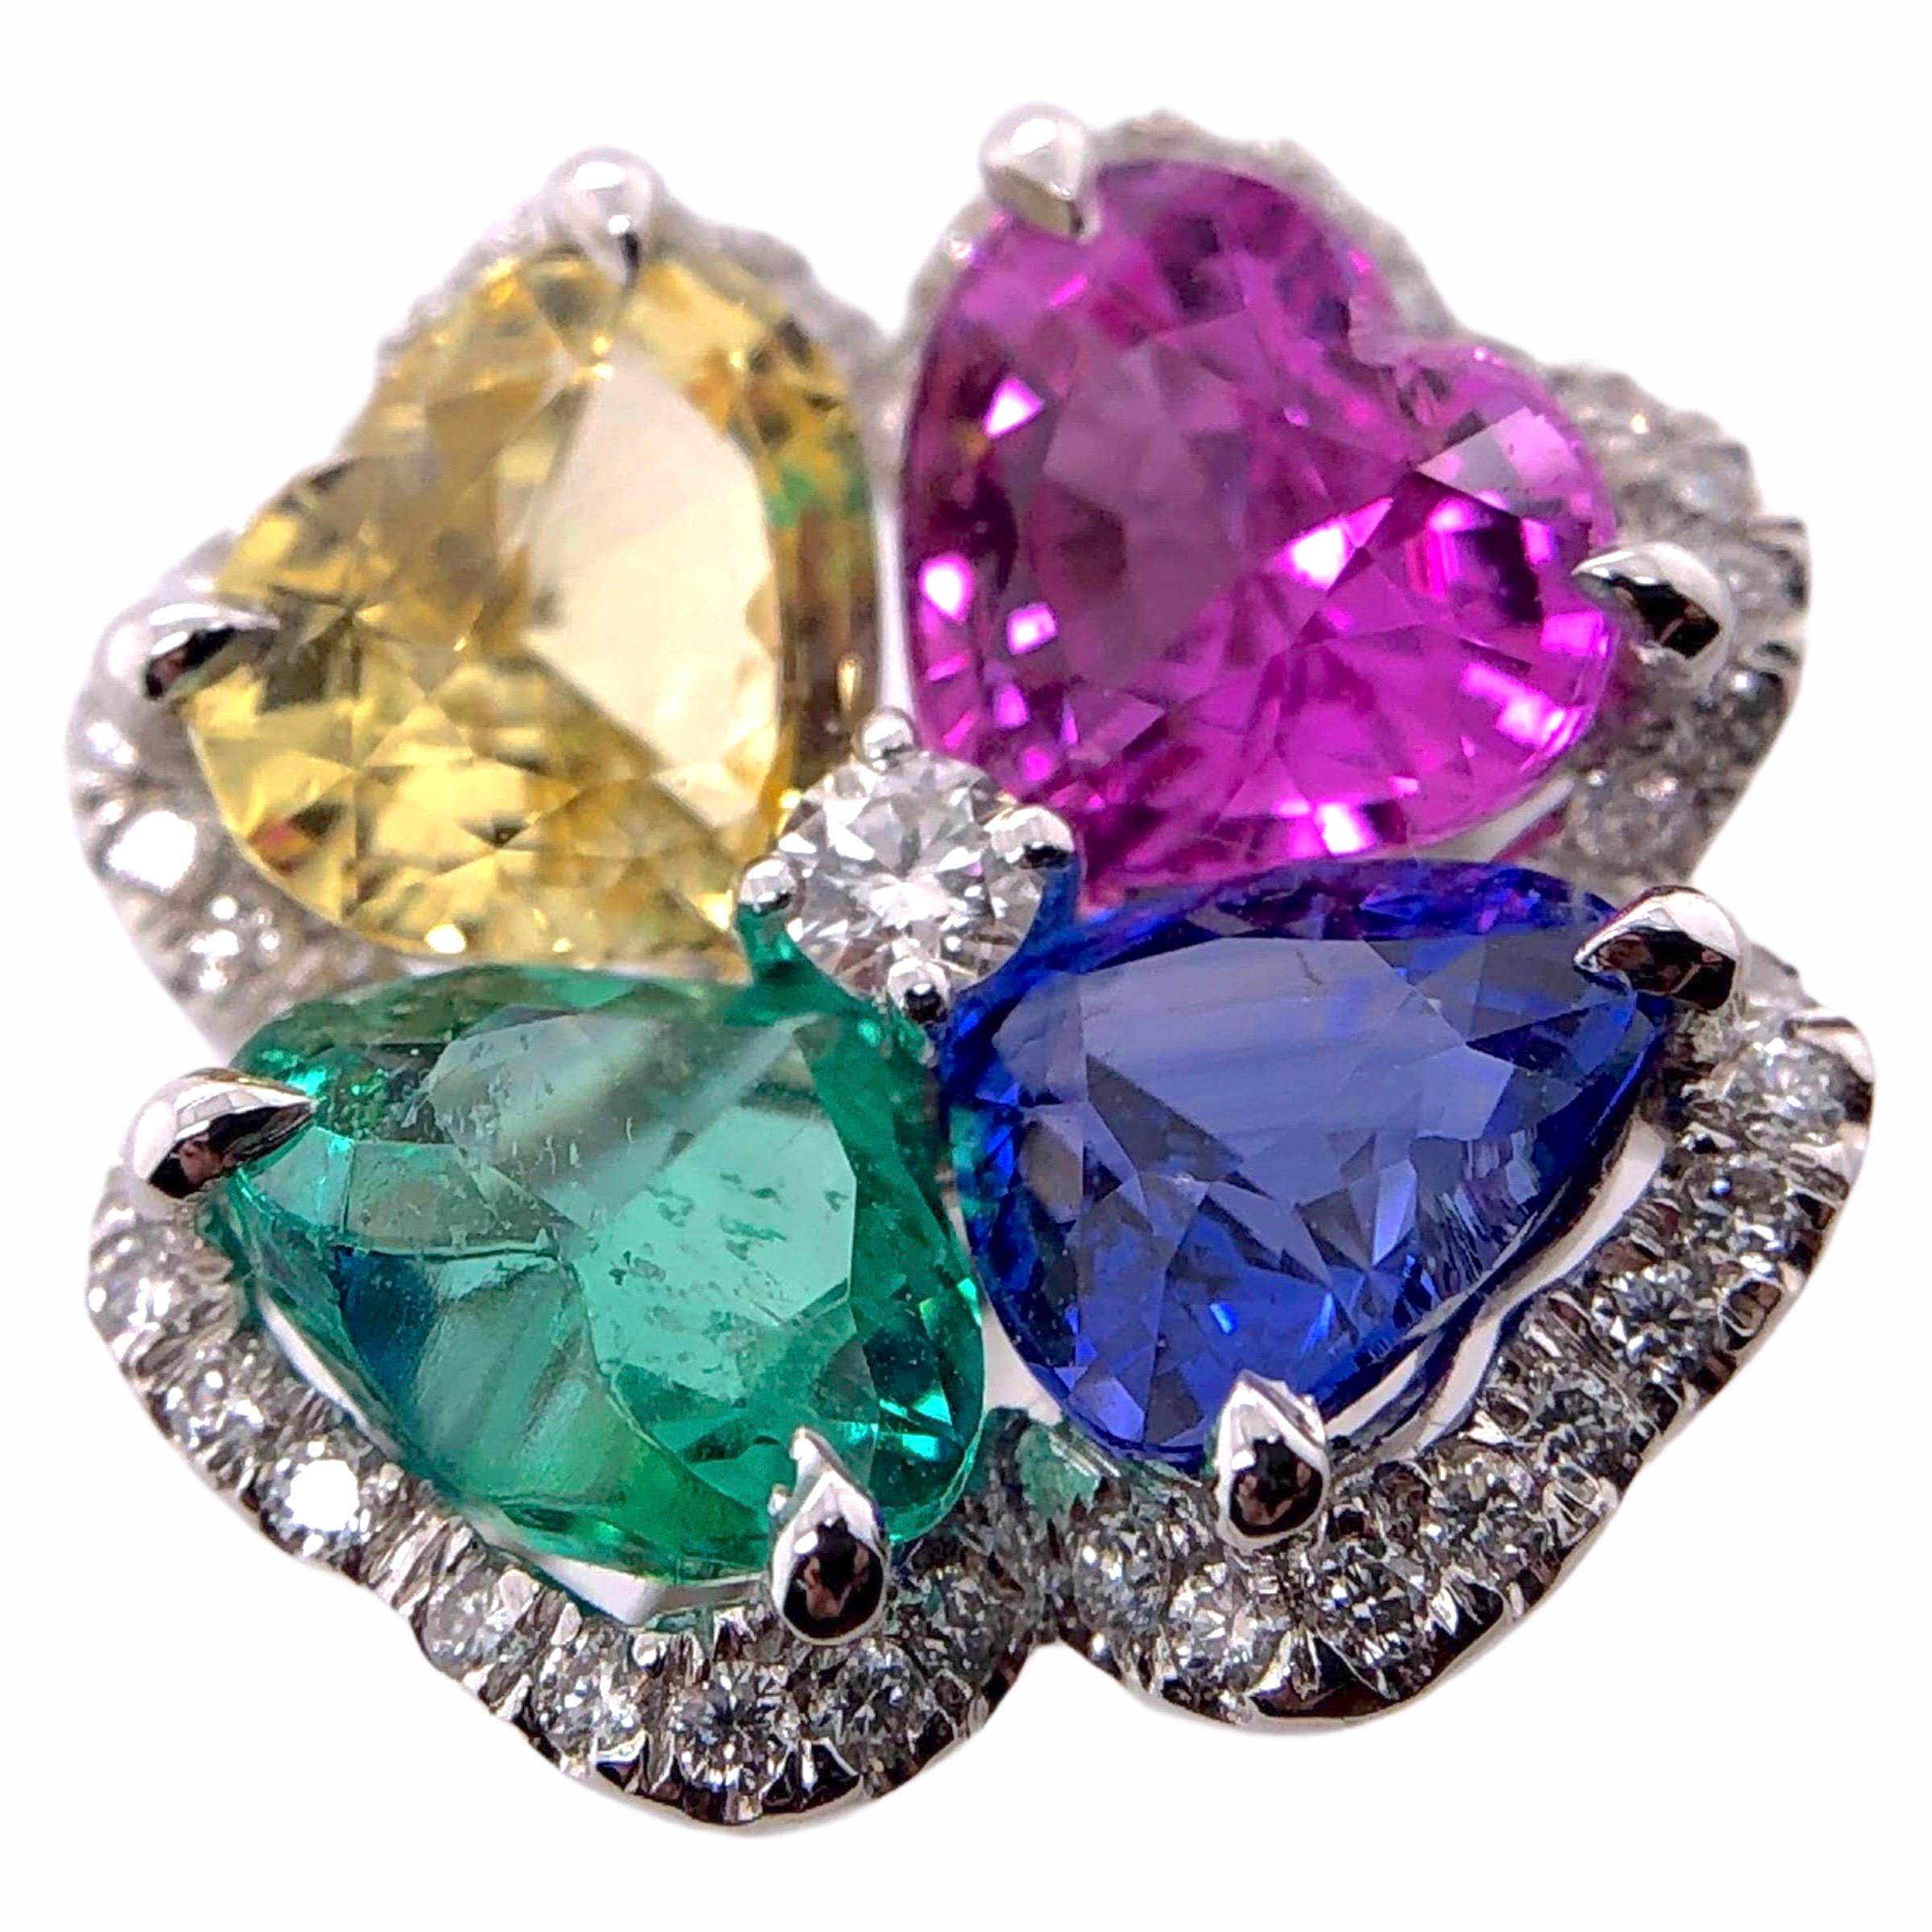 PARIS Craft House Multi Sapphire Emerald Heart Ring in 18 Karat White Gold.

- 1 Heart-cut Emerald/1.15ct
- 1 Heart-cut Pink Sapphire/1.88ct
- 1 Heatt-cut Blue Sapphire/1.41ct
- 1 Heart-cut Yellow Sapphire/1.65ct
- 1 Brilliant-cut Diamond
- Pavé